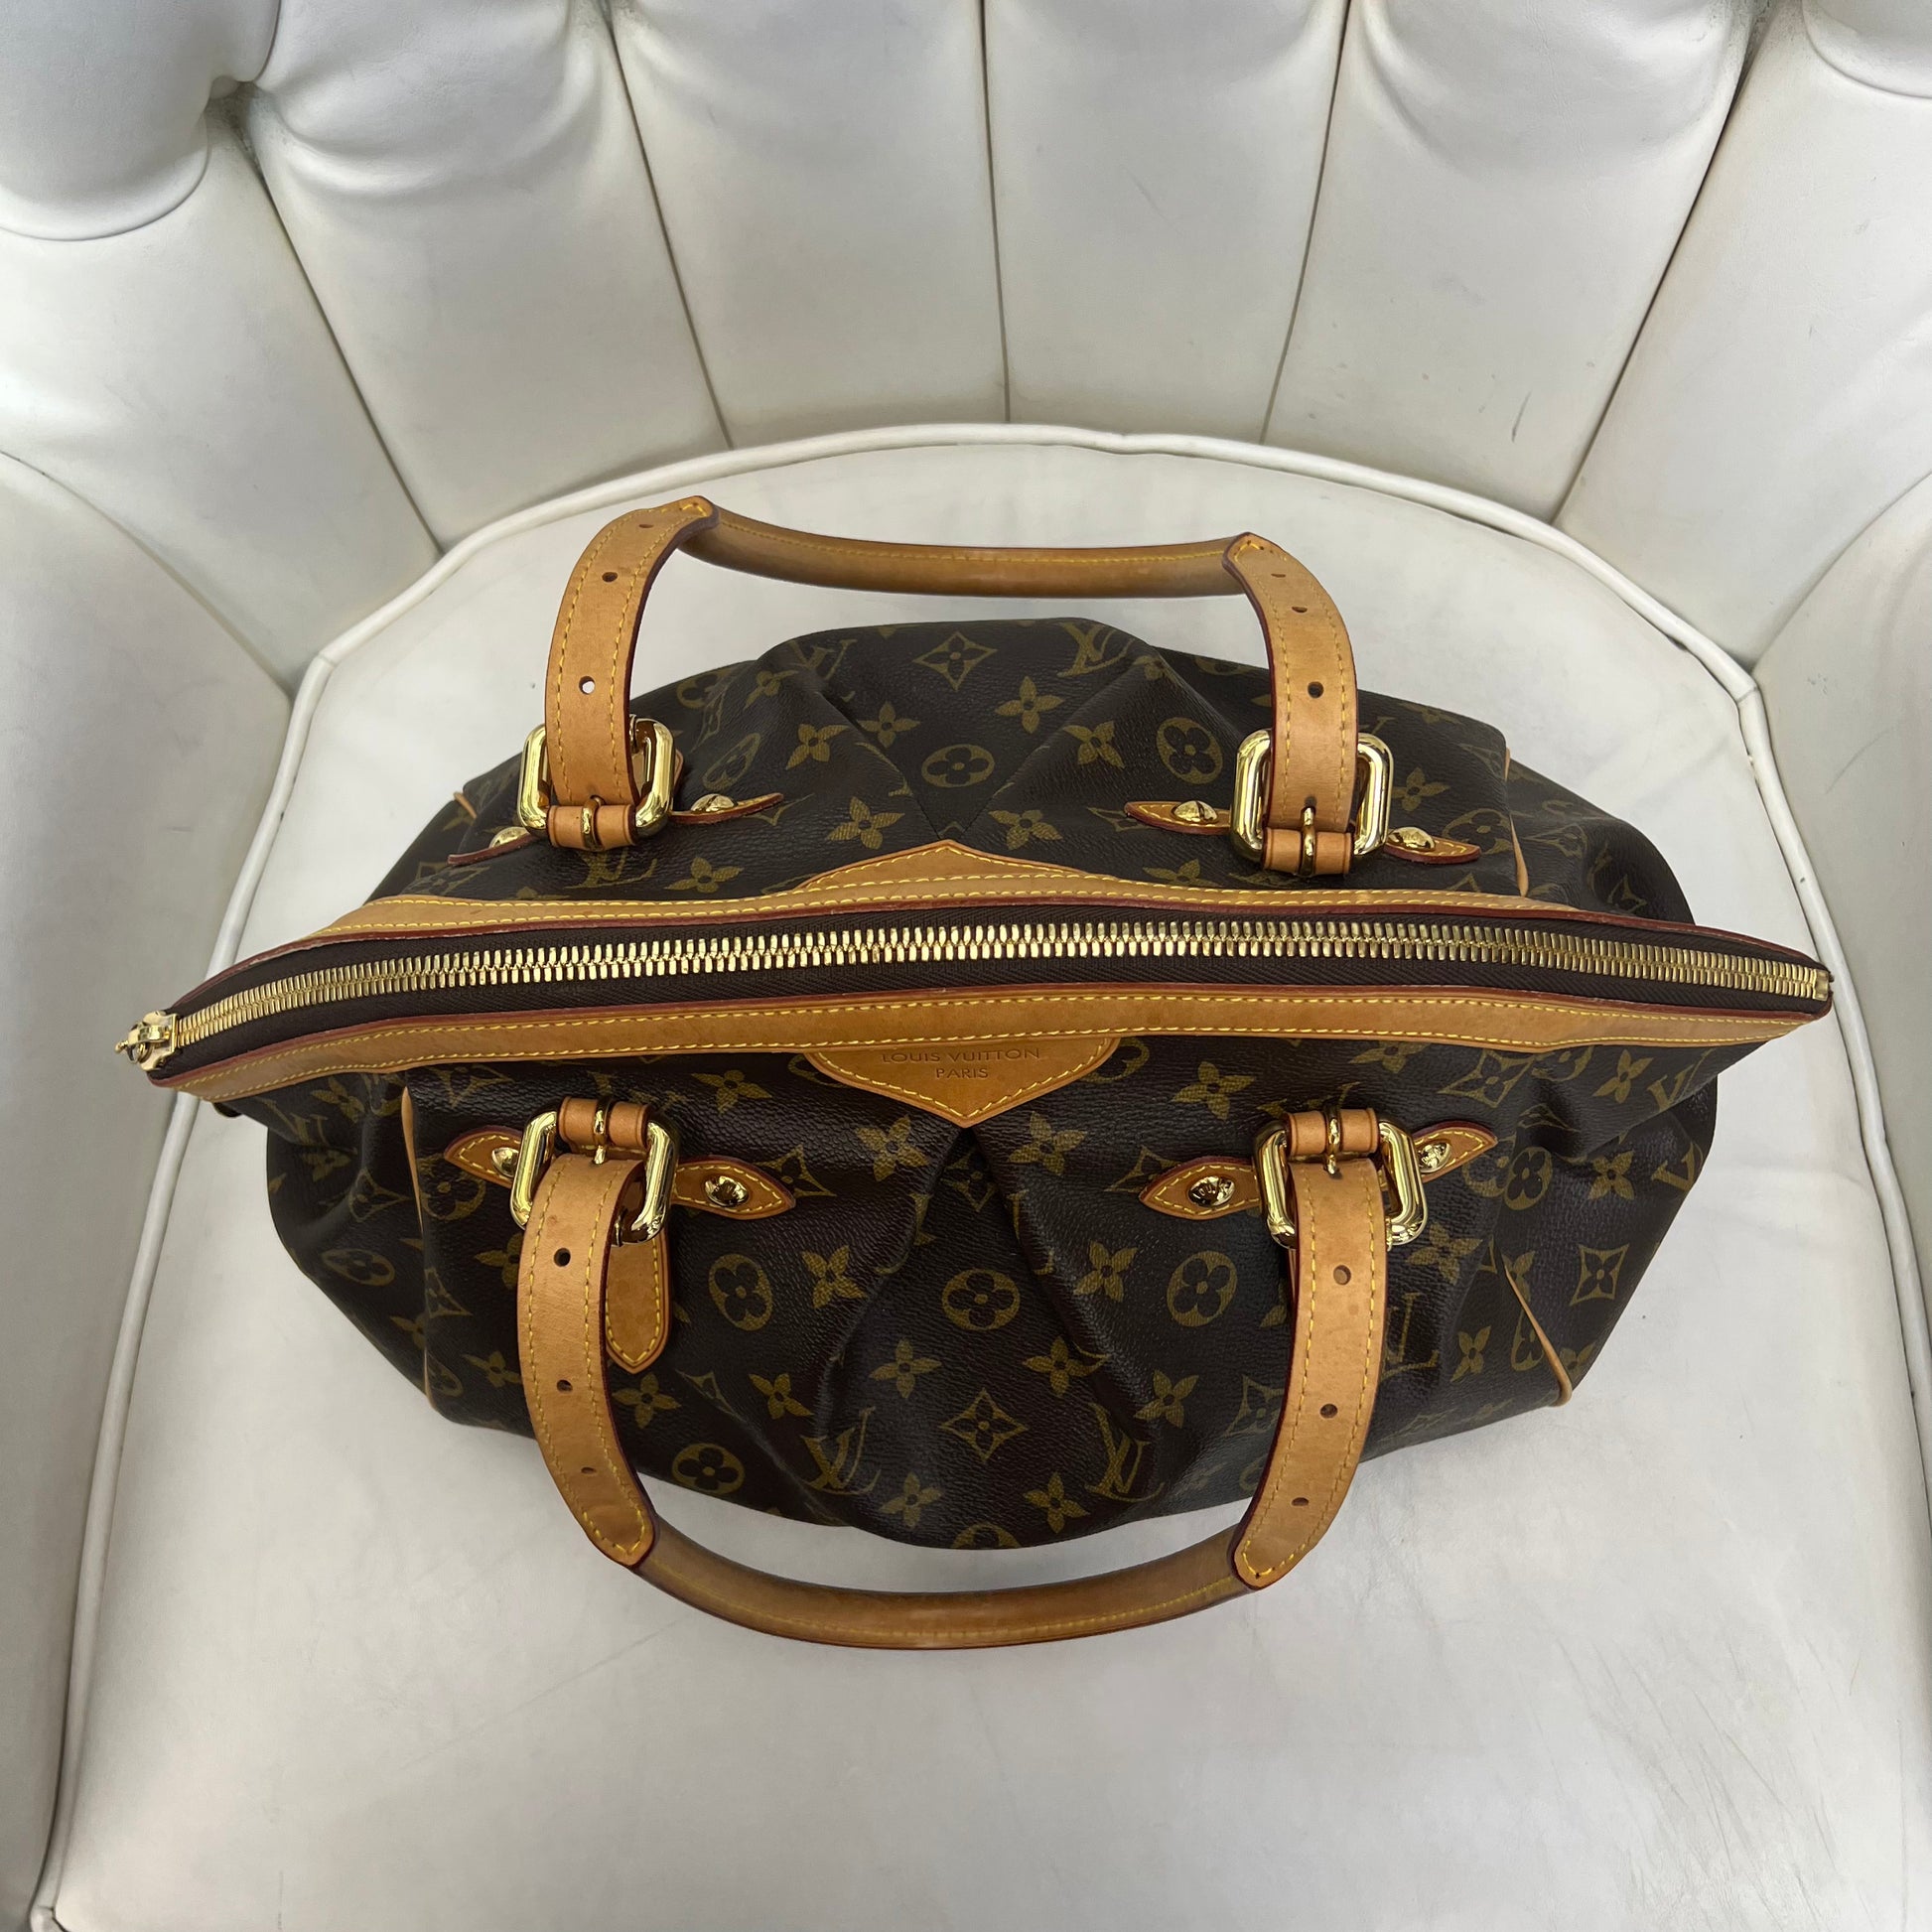 Louis Vuitton Tivoli GM Monogram Shoulder Bag